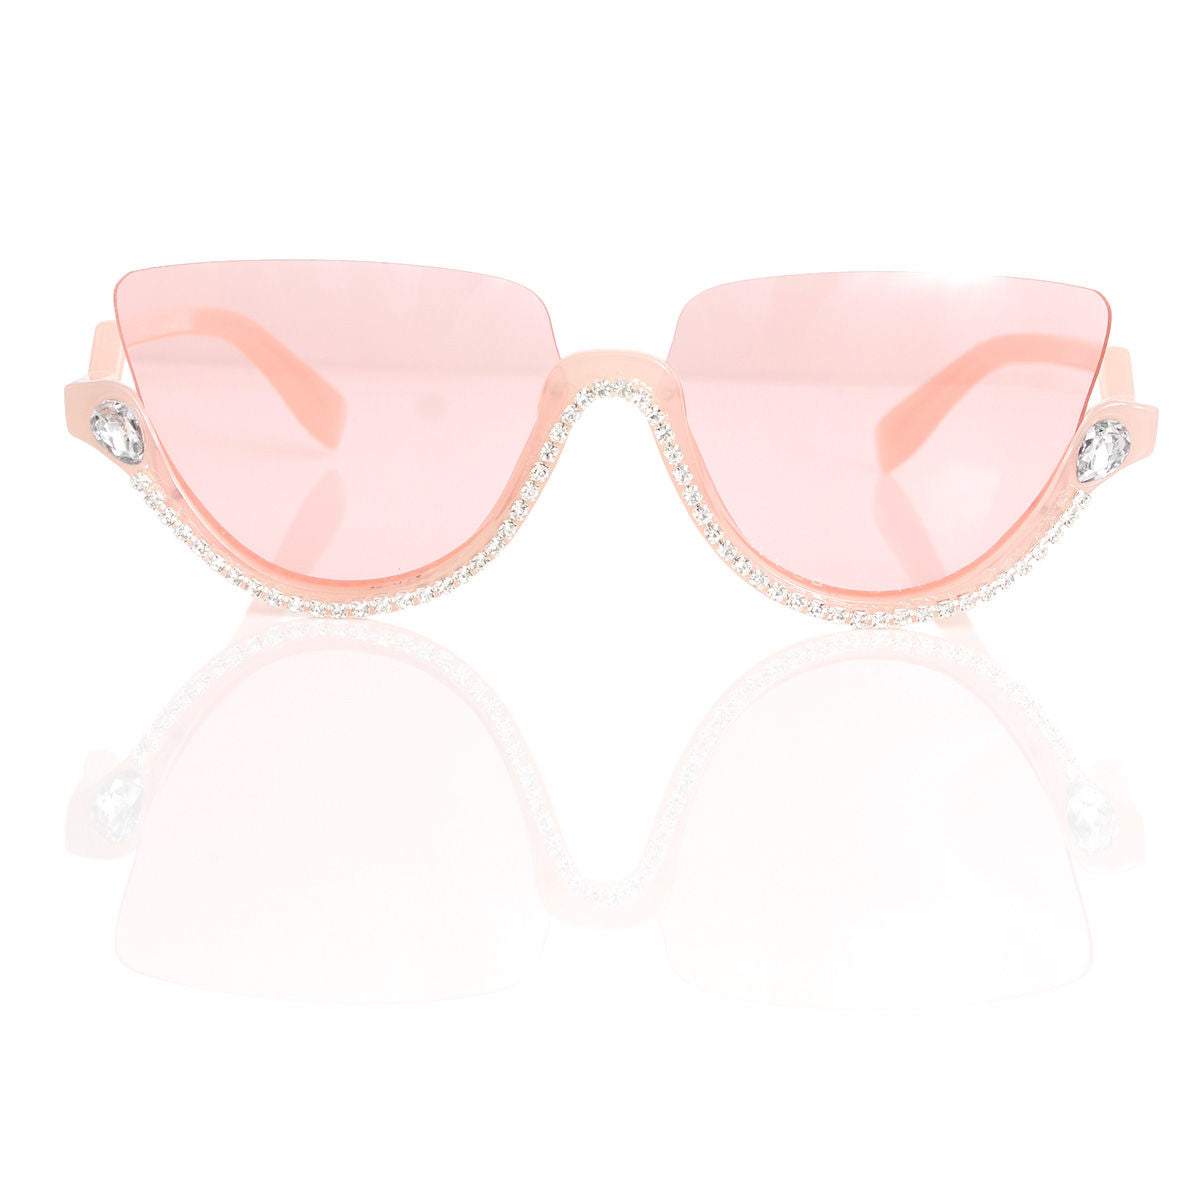 Sunglasses Half Frame Pink Eyewear for Women